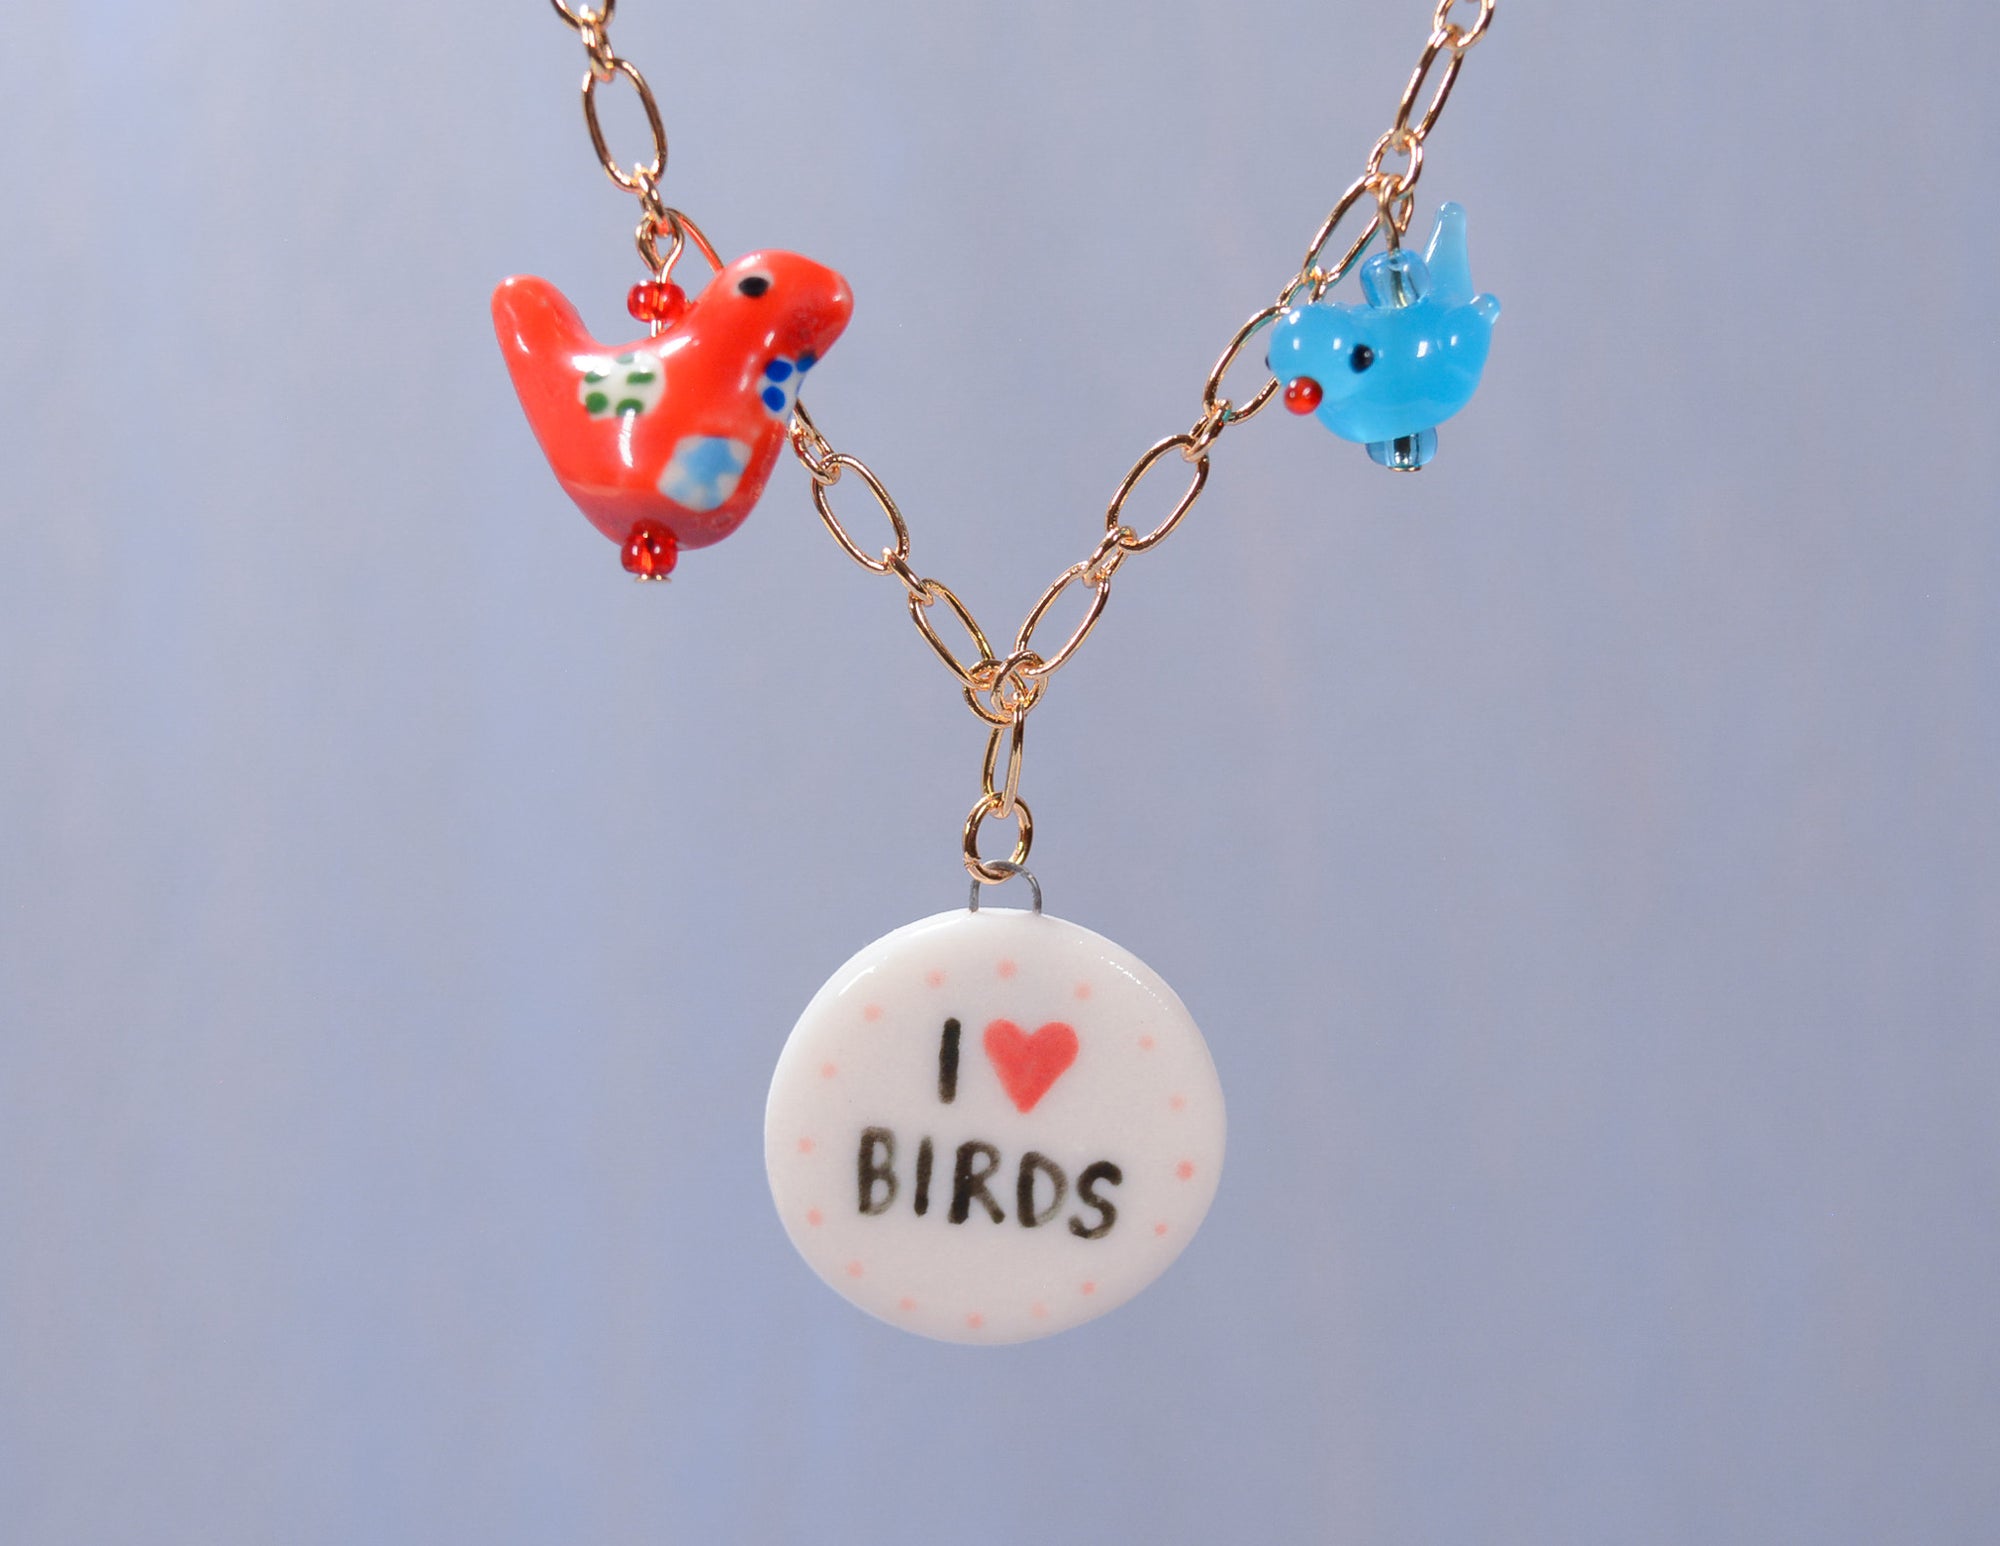 I <3 Birds Necklace